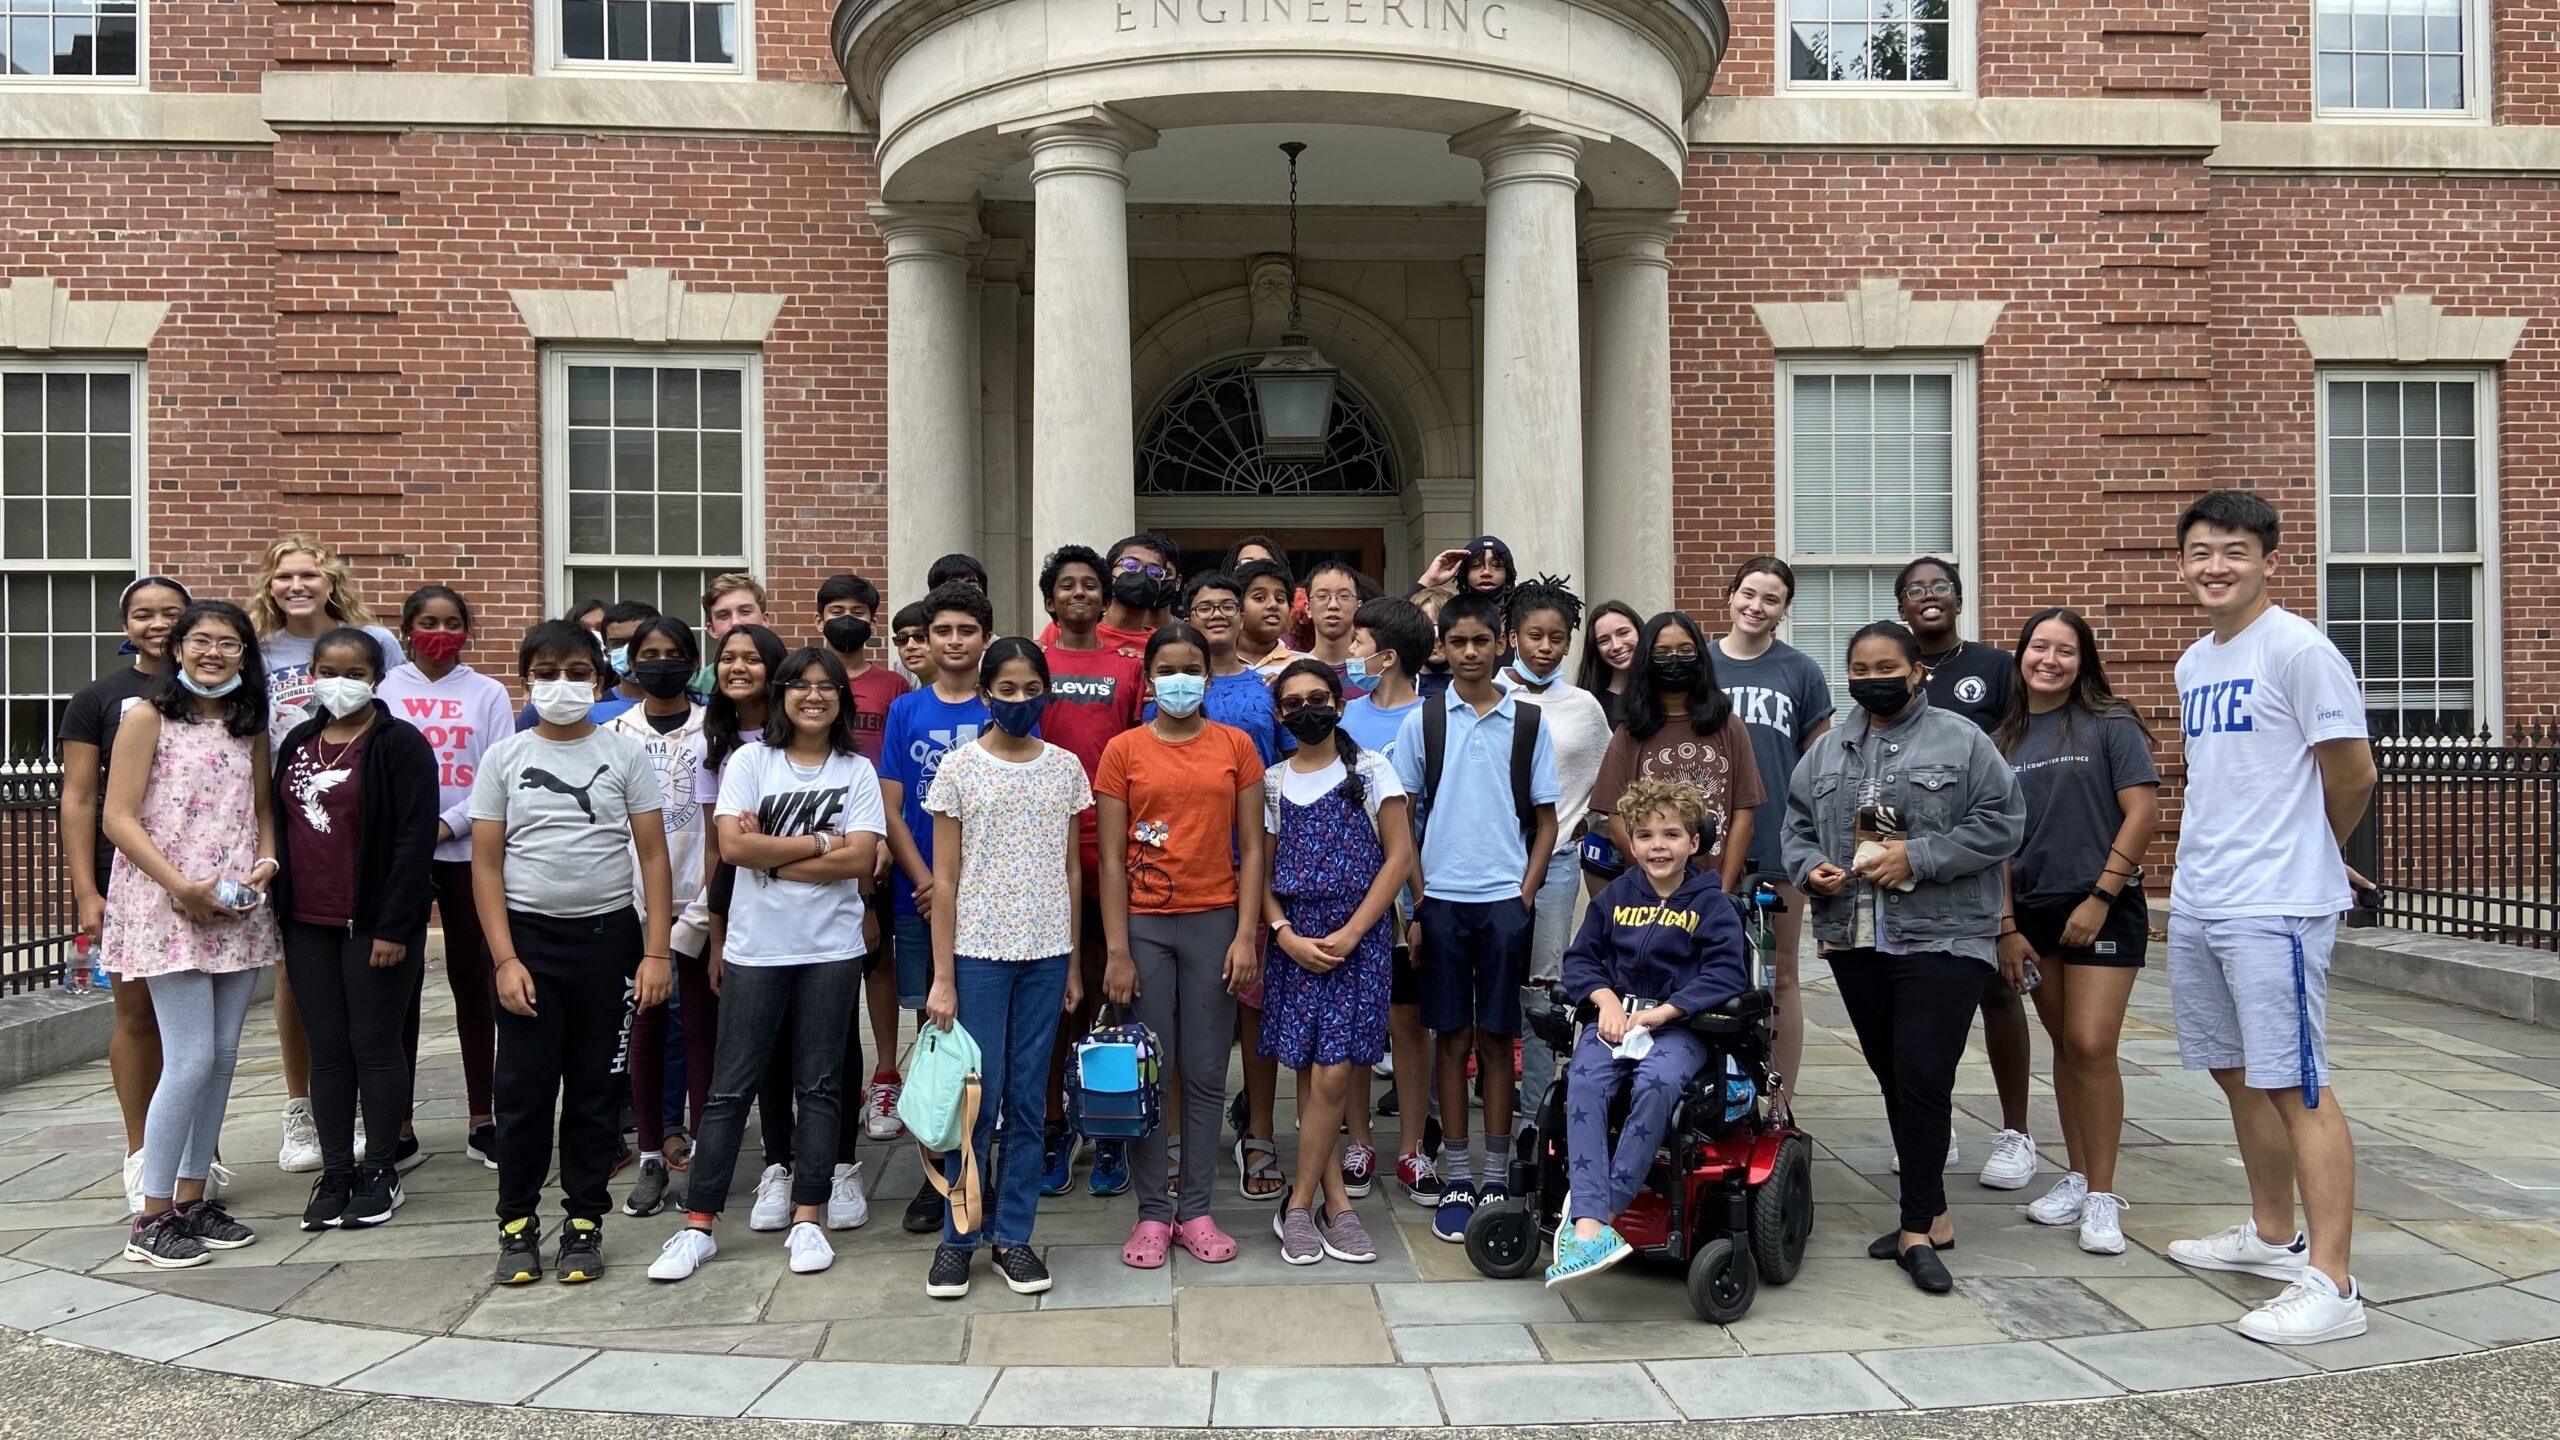 The Innoworks team gathers outside Hudson Hall at Duke University